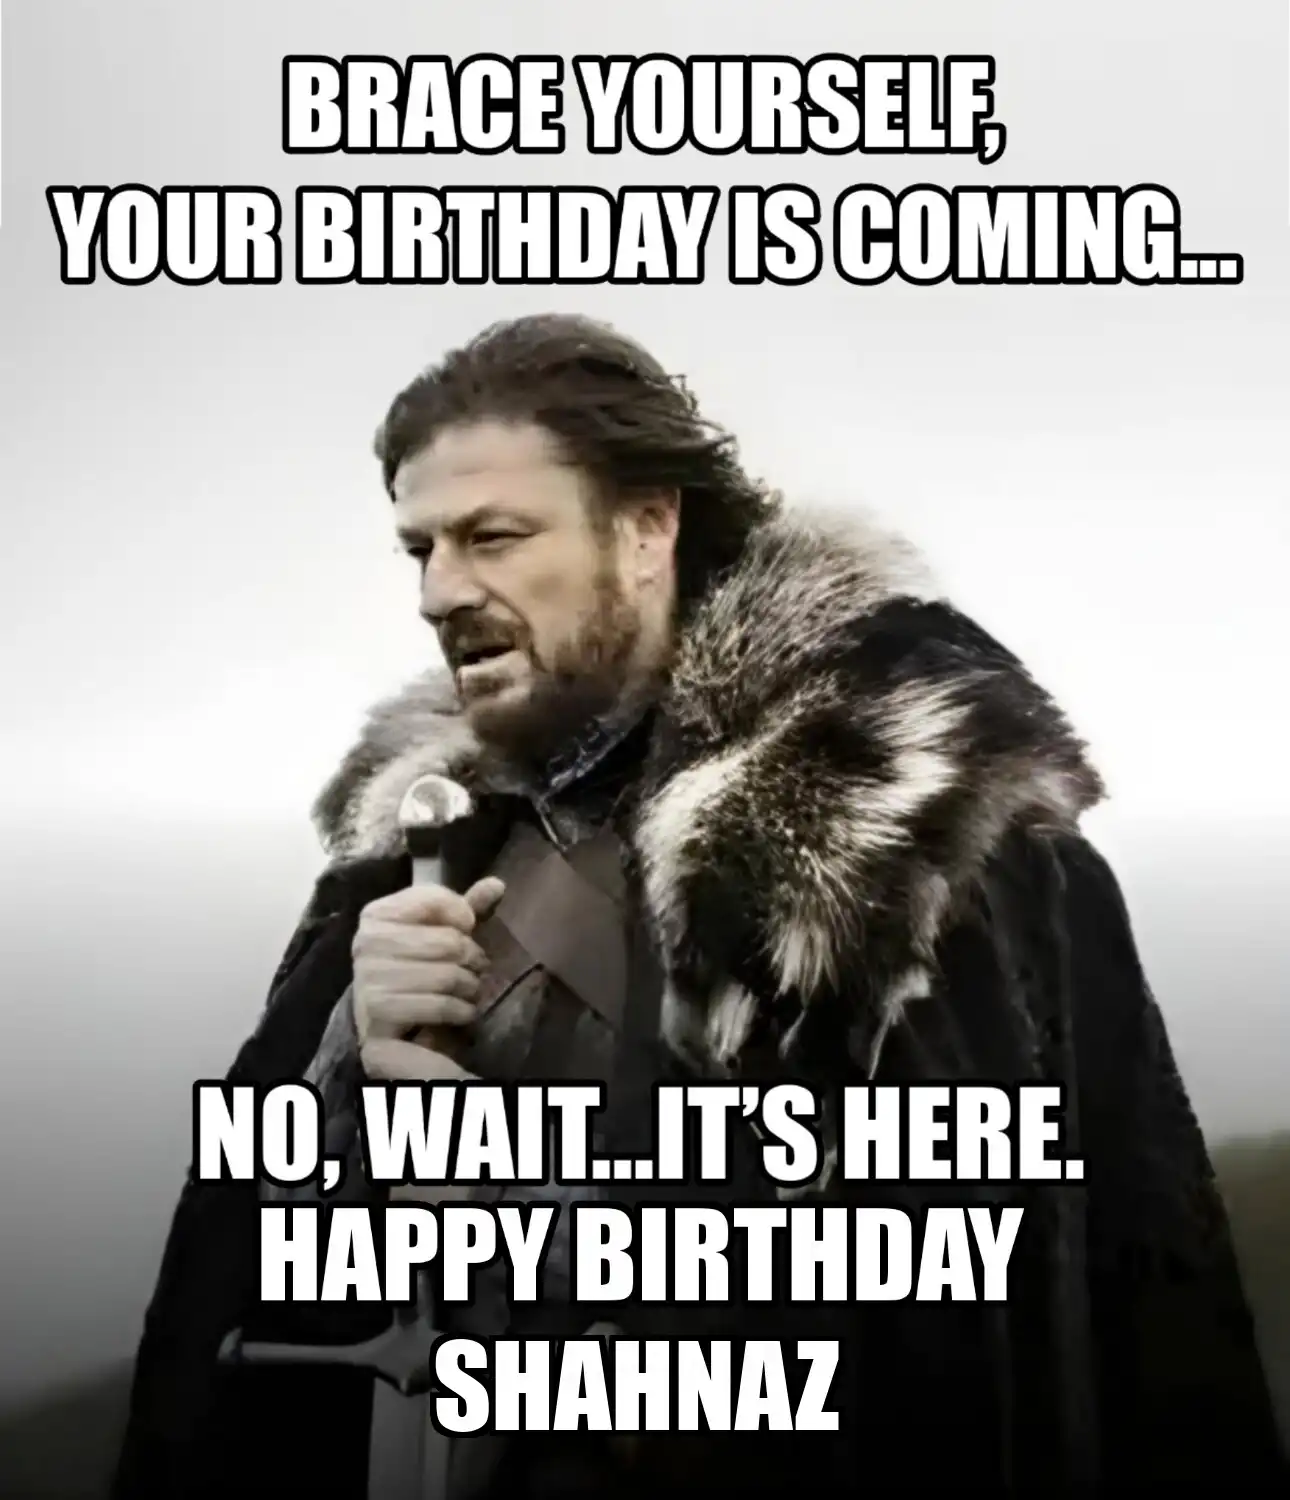 Happy Birthday Shahnaz Brace Yourself Your Birthday Is Coming Meme